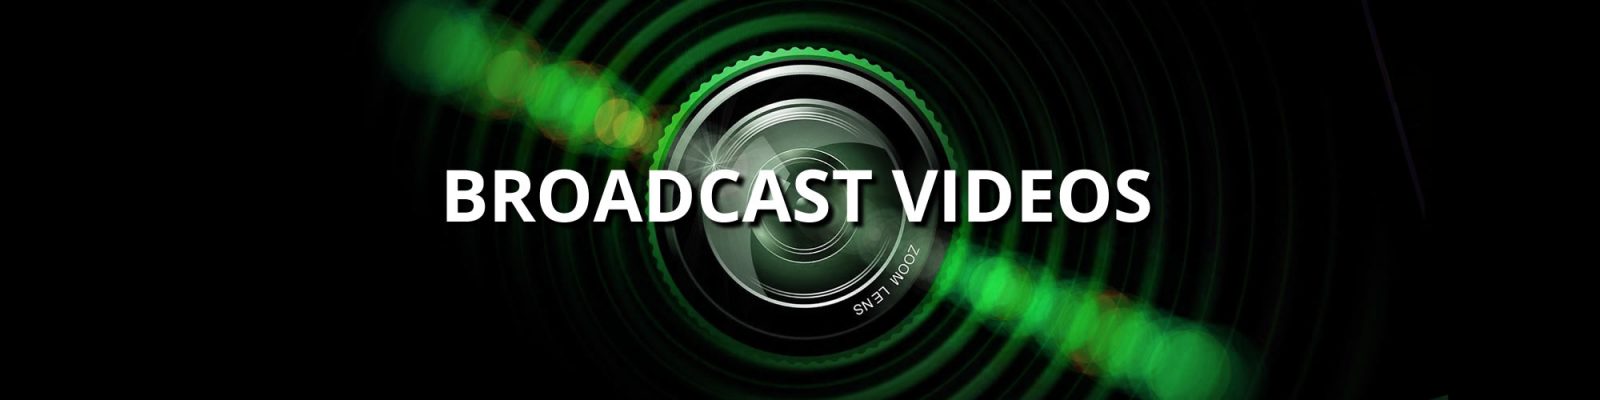 Broadcast Videos